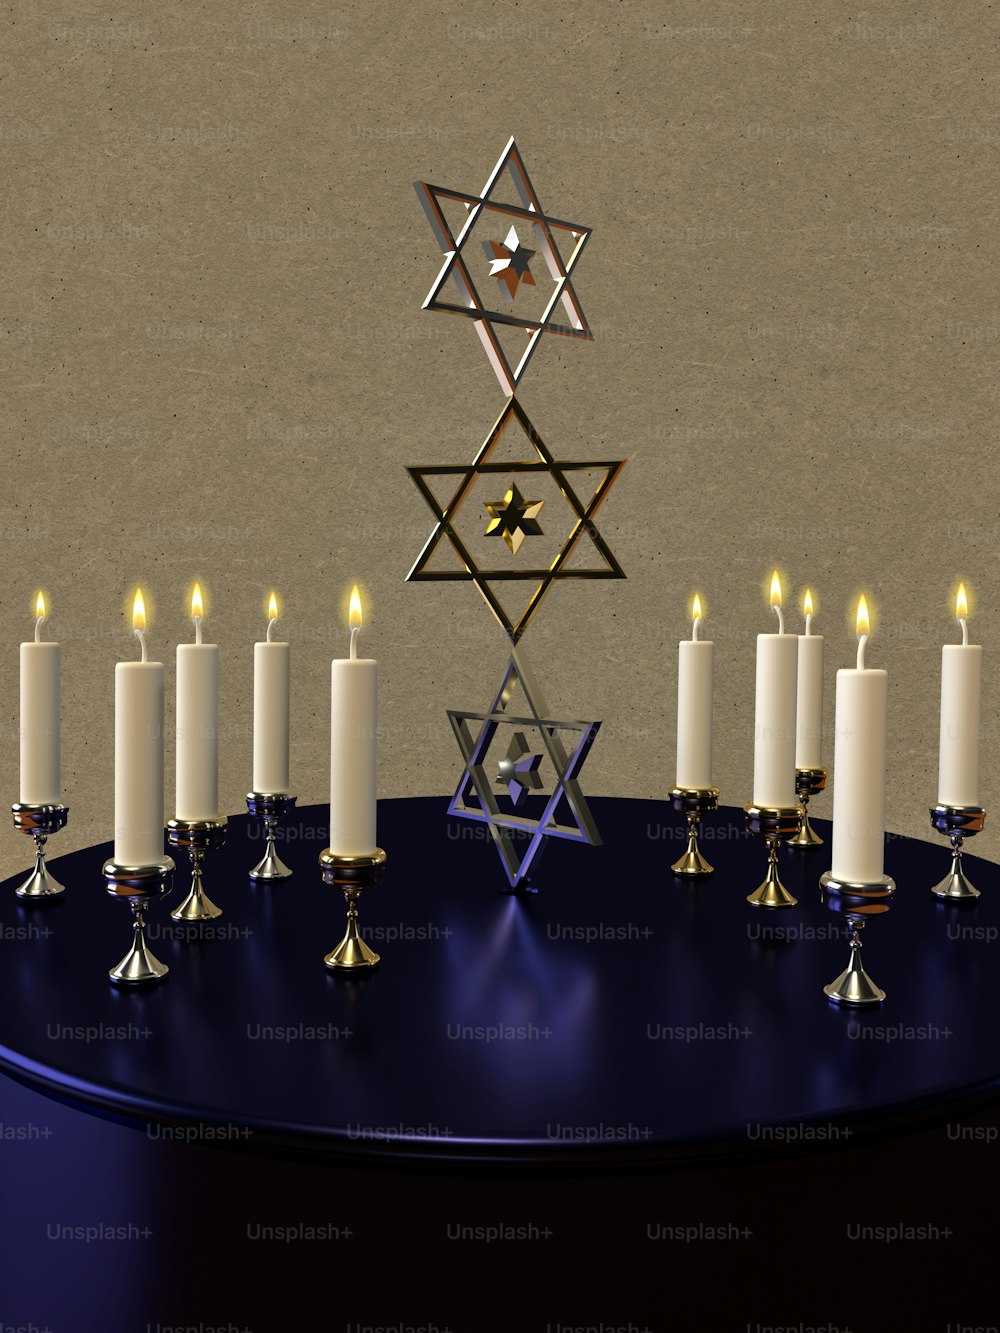 Una menorah di Hanukkah con candele accese e una stella di David